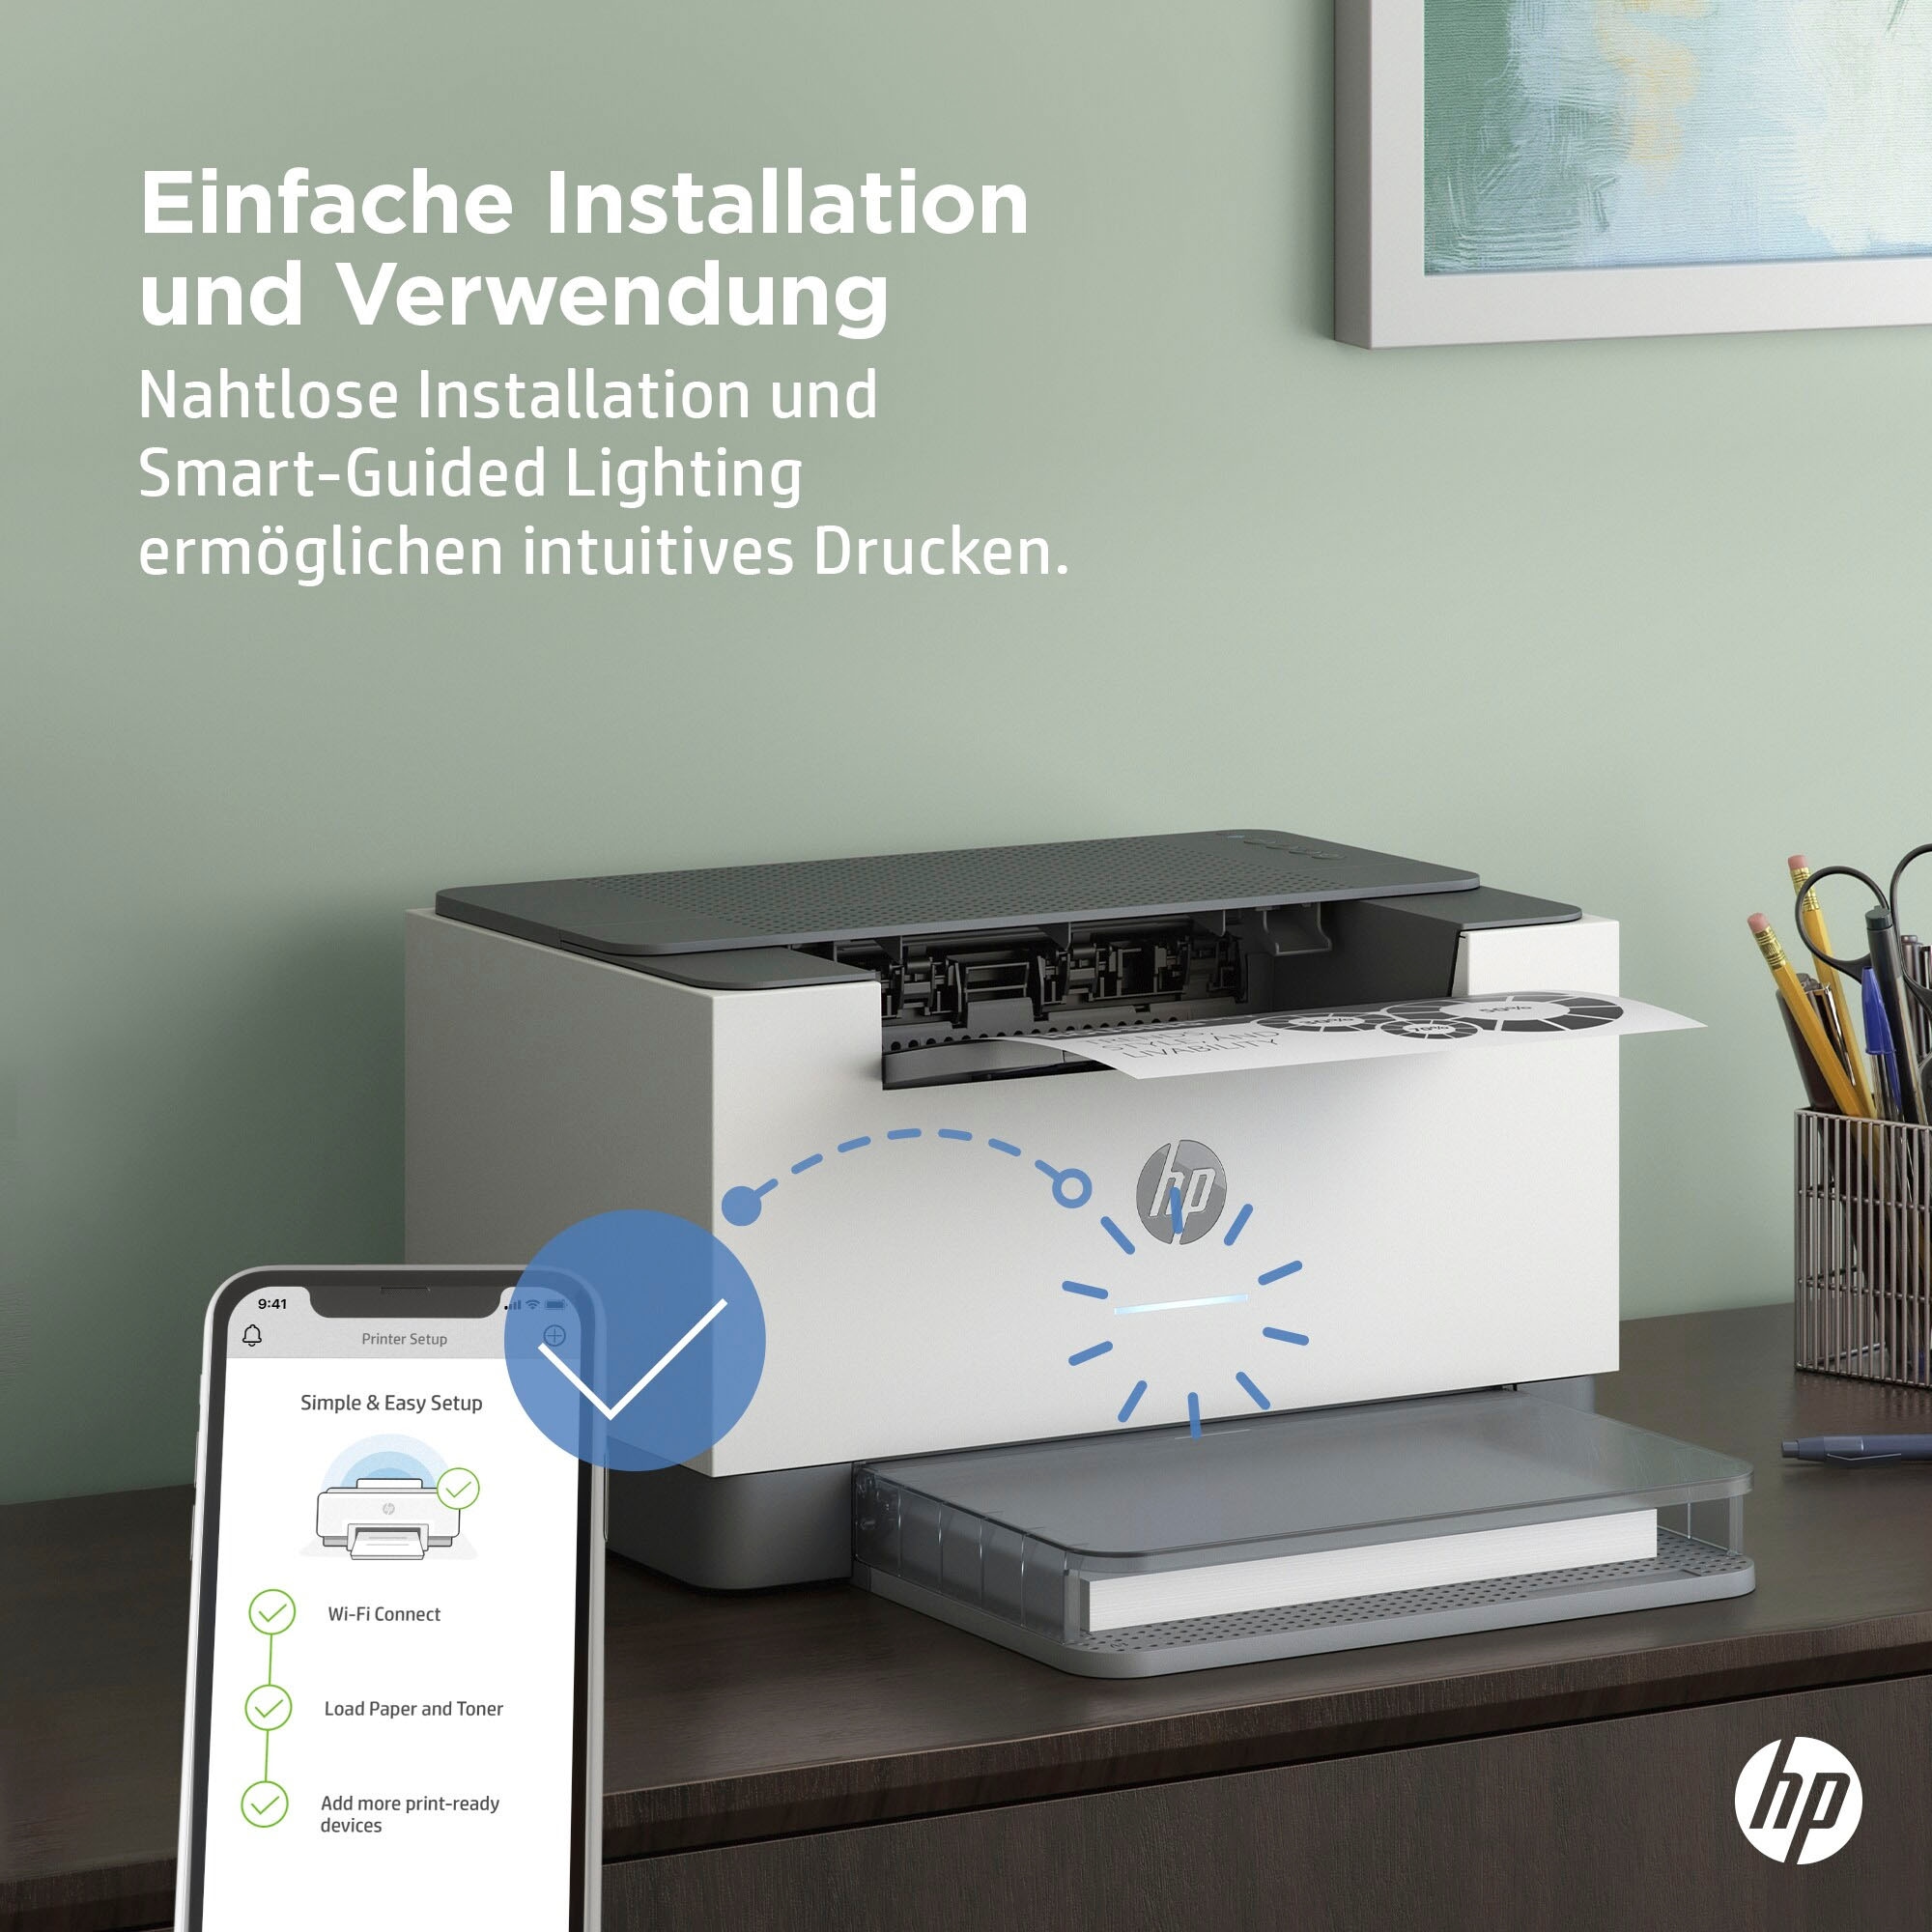 HP Laserdrucker »LaserJet M209dw«, 2 Monate gratis Drucken mit HP Instant Ink inklusive